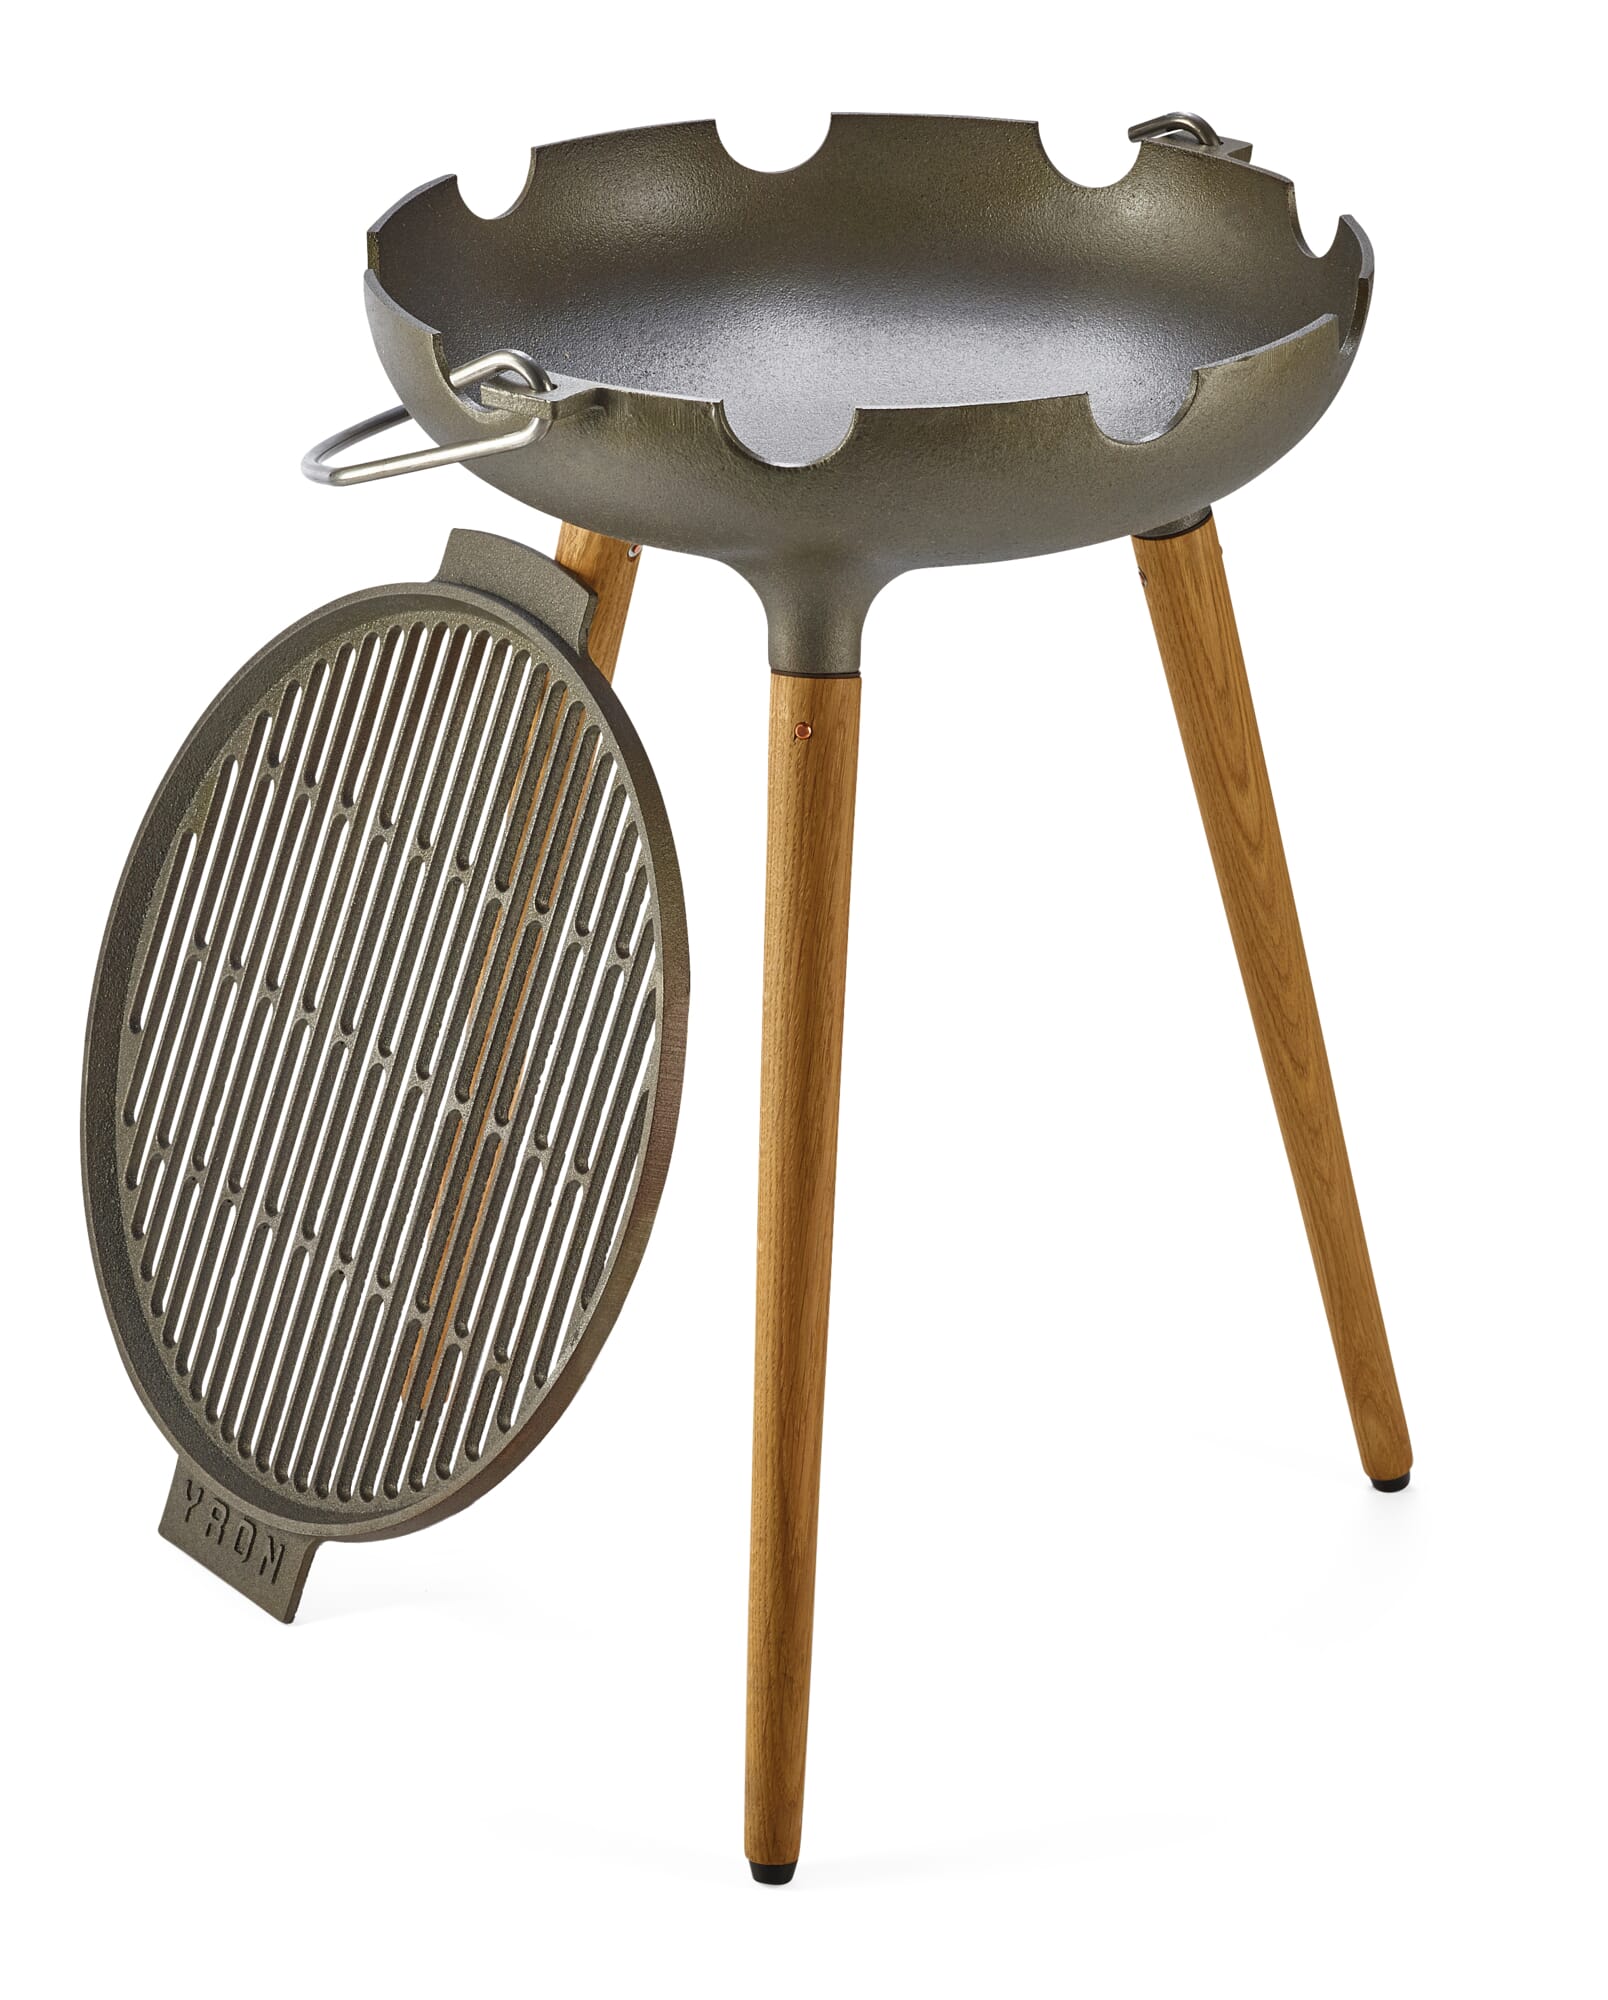 Three-legged grill cast iron